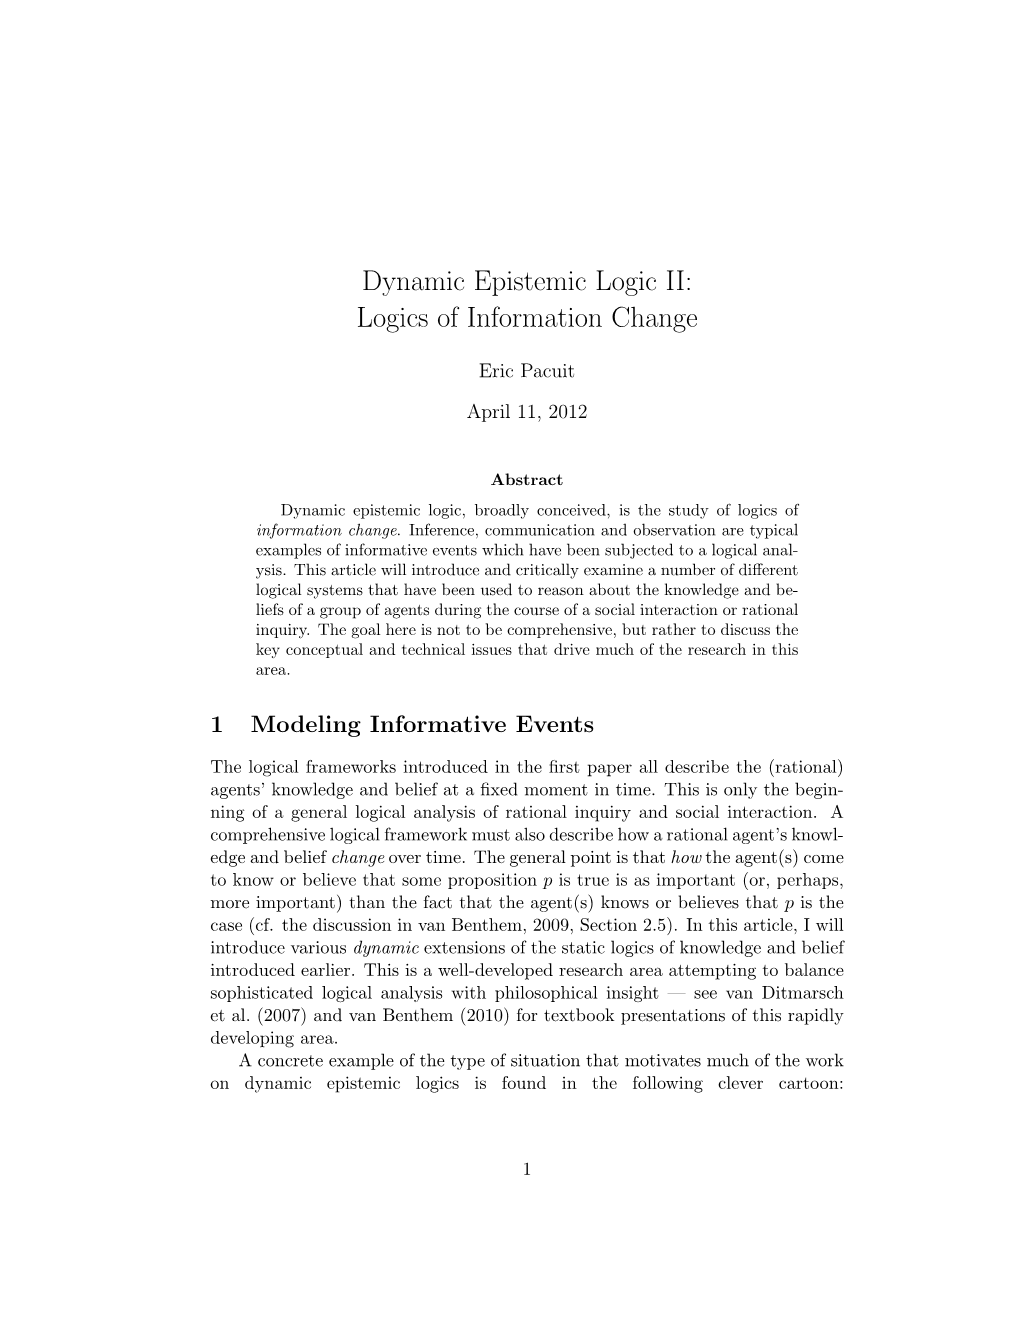 Dynamic Epistemic Logic II: Logics of Information Change